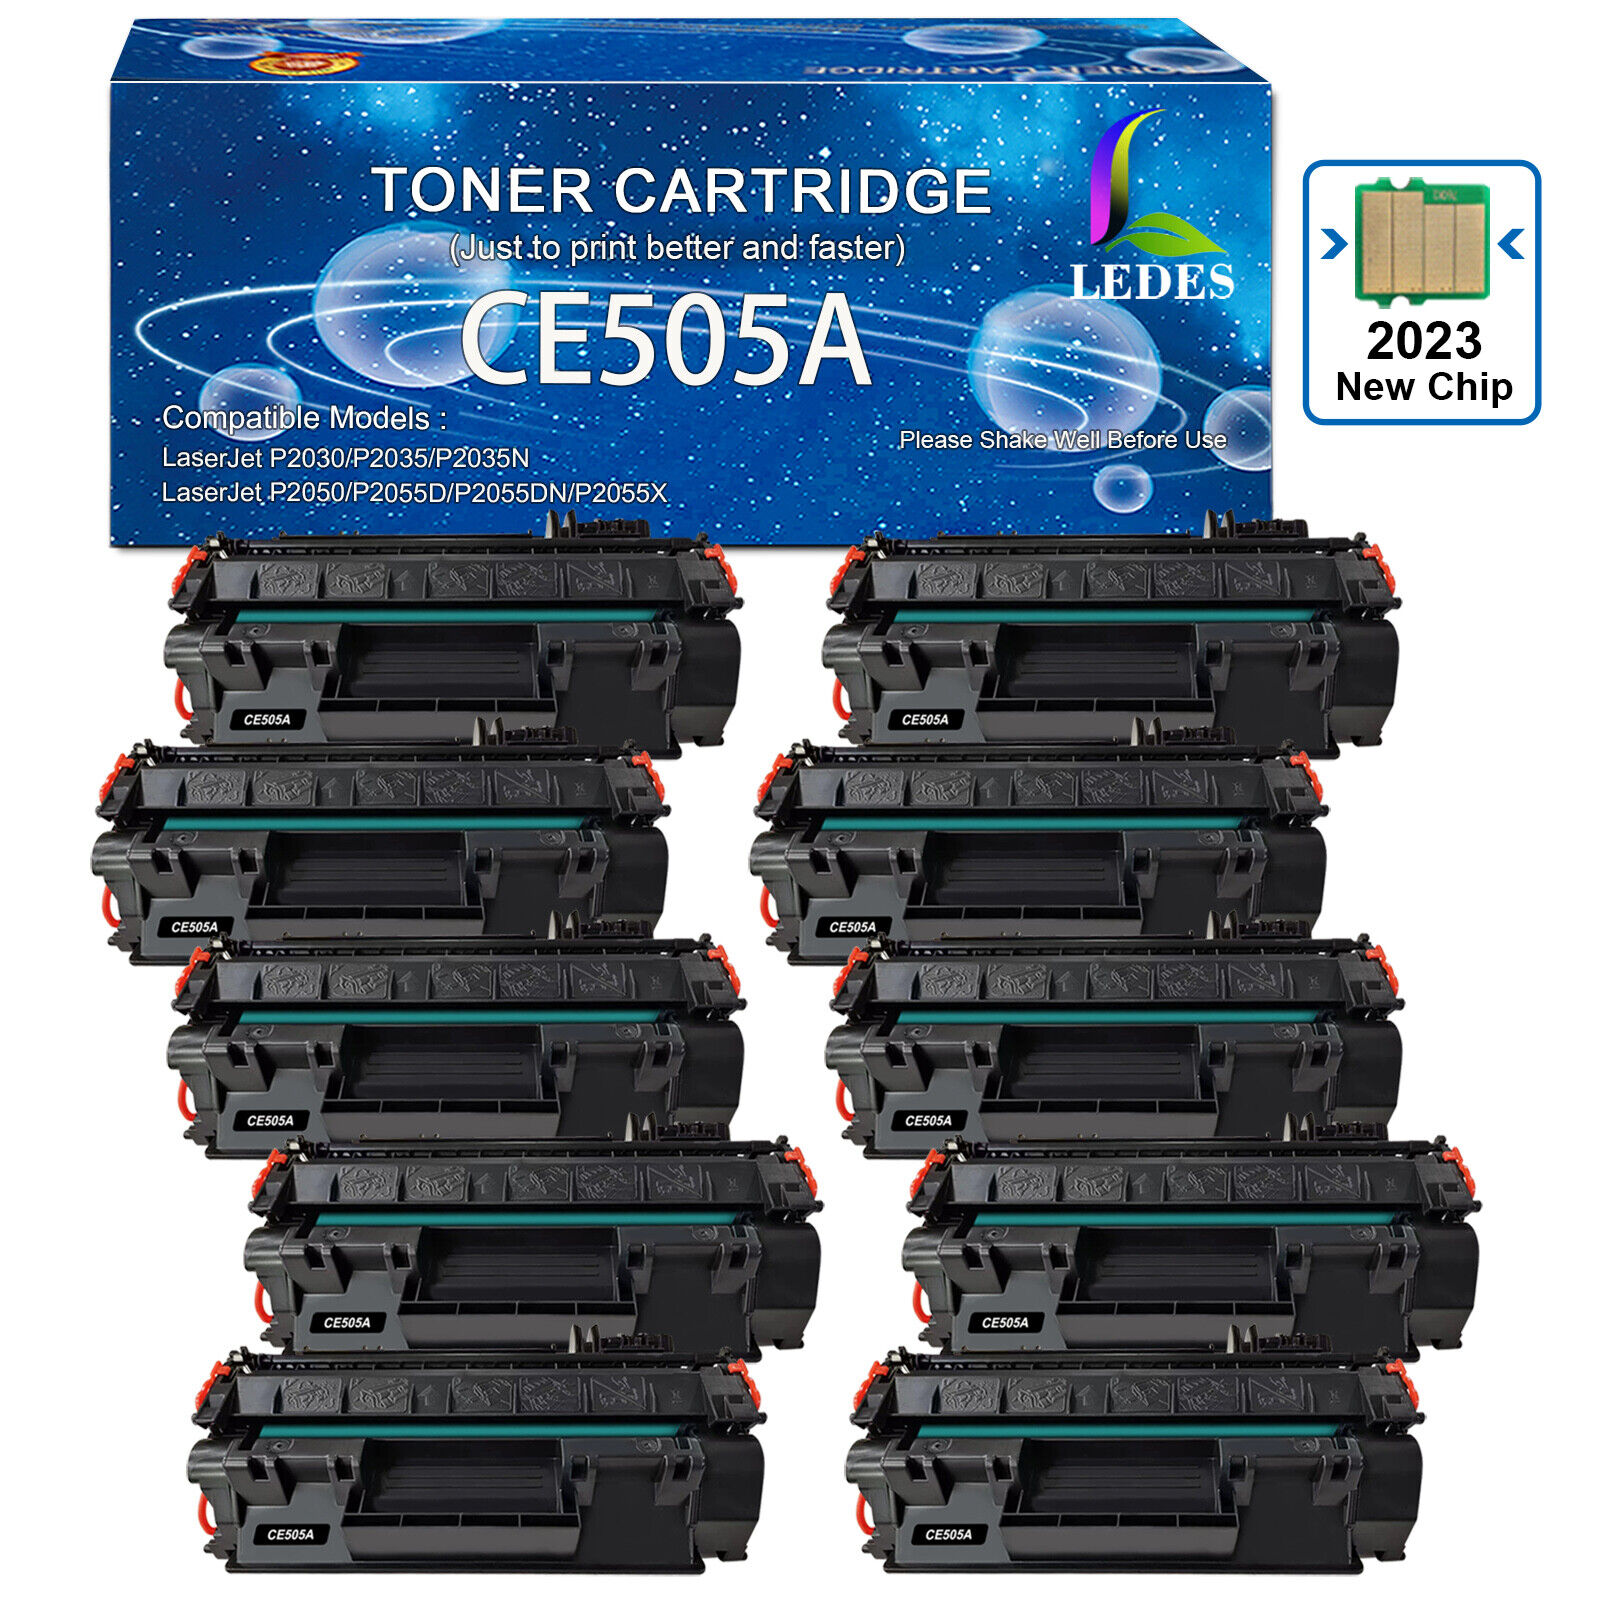 12-Pk/Pack CE505A 05A Toner Compatible for HP LaserJet P2035 P2035n P2055dn